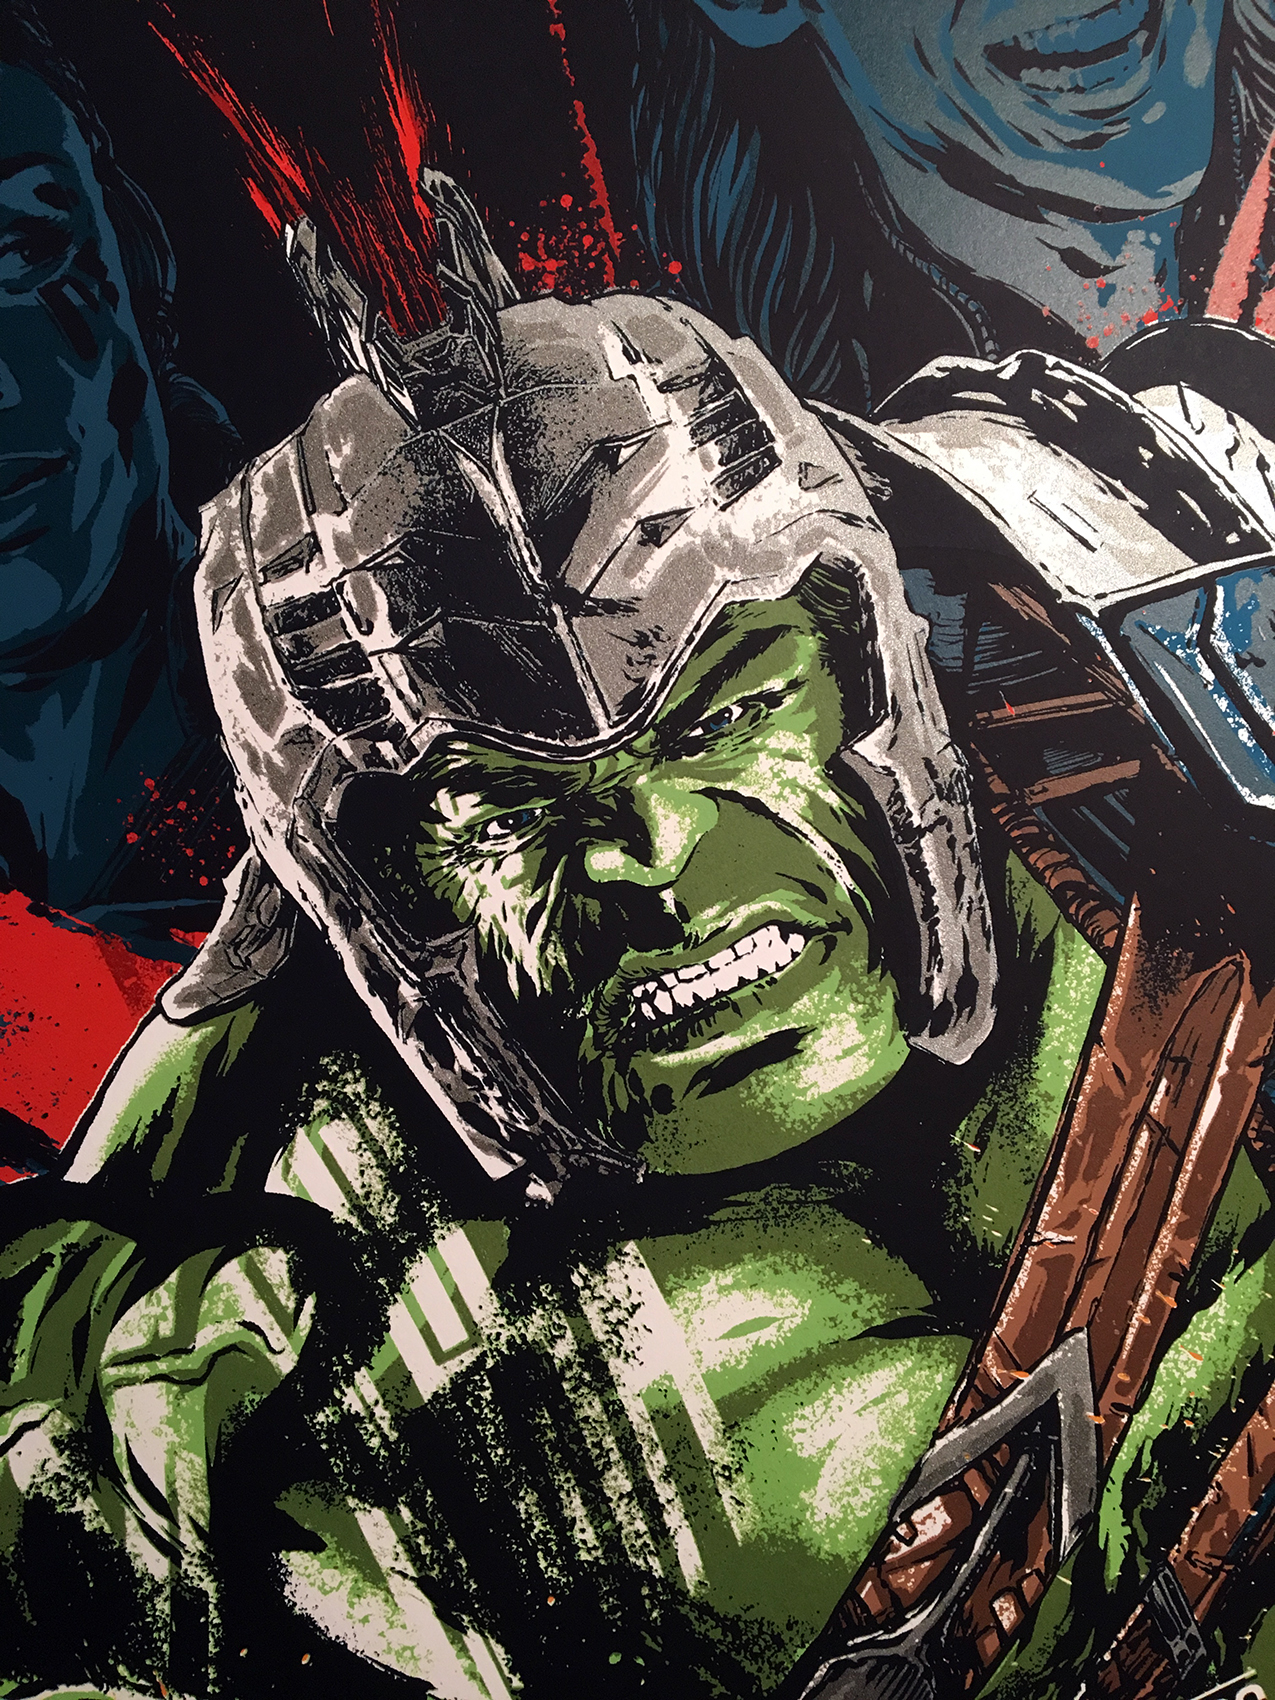 Thor Ragnarok Comic Poster Wallpapers